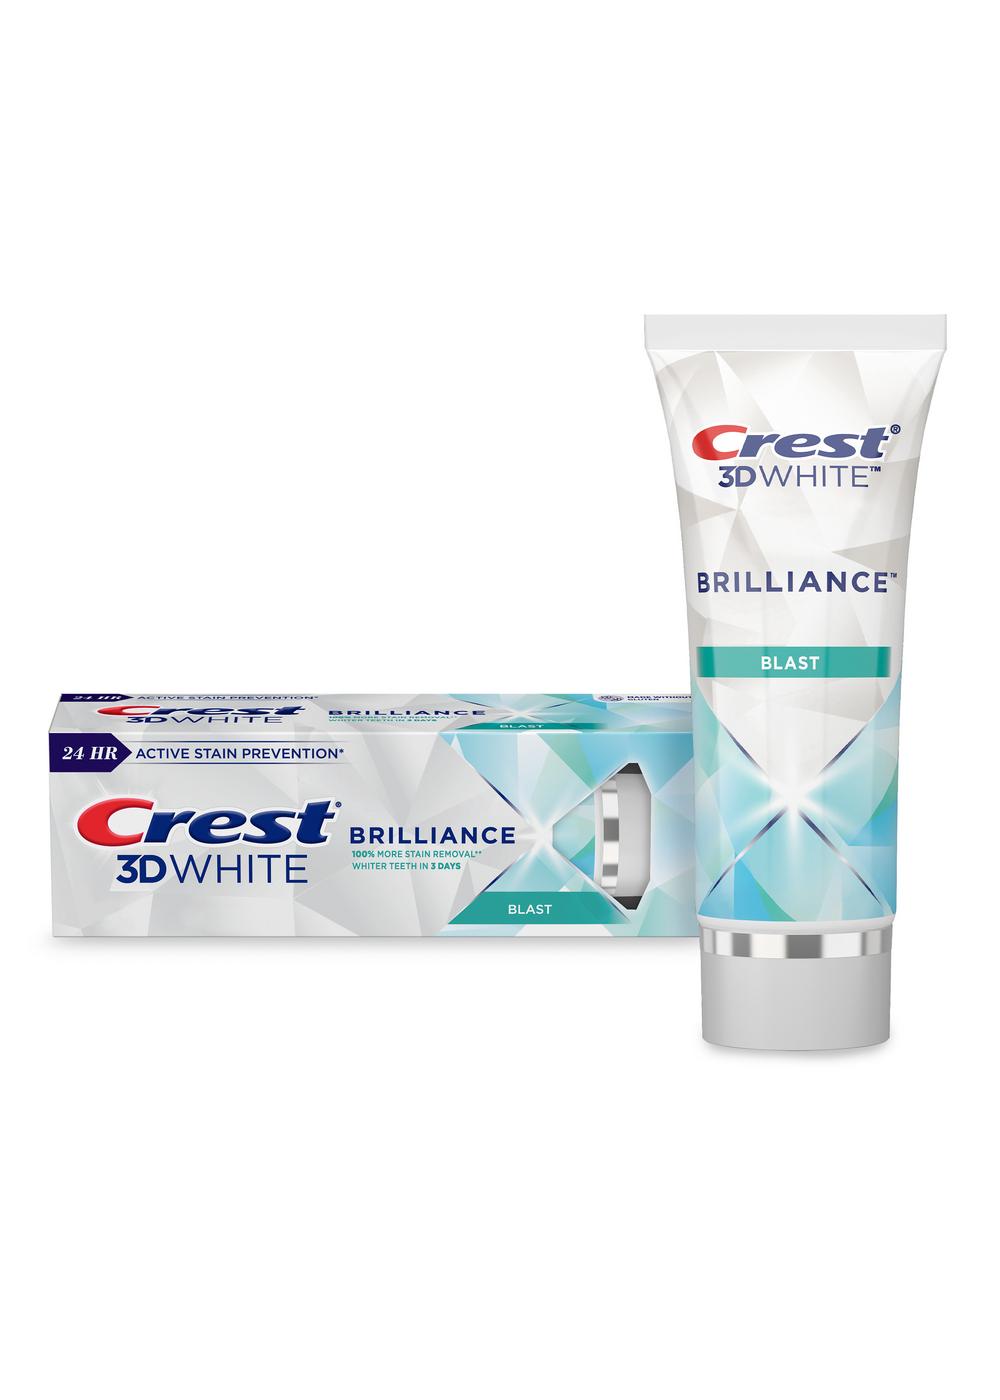 Crest 3D White Brilliance Toothpaste - Blast, 2 Pk; image 10 of 10